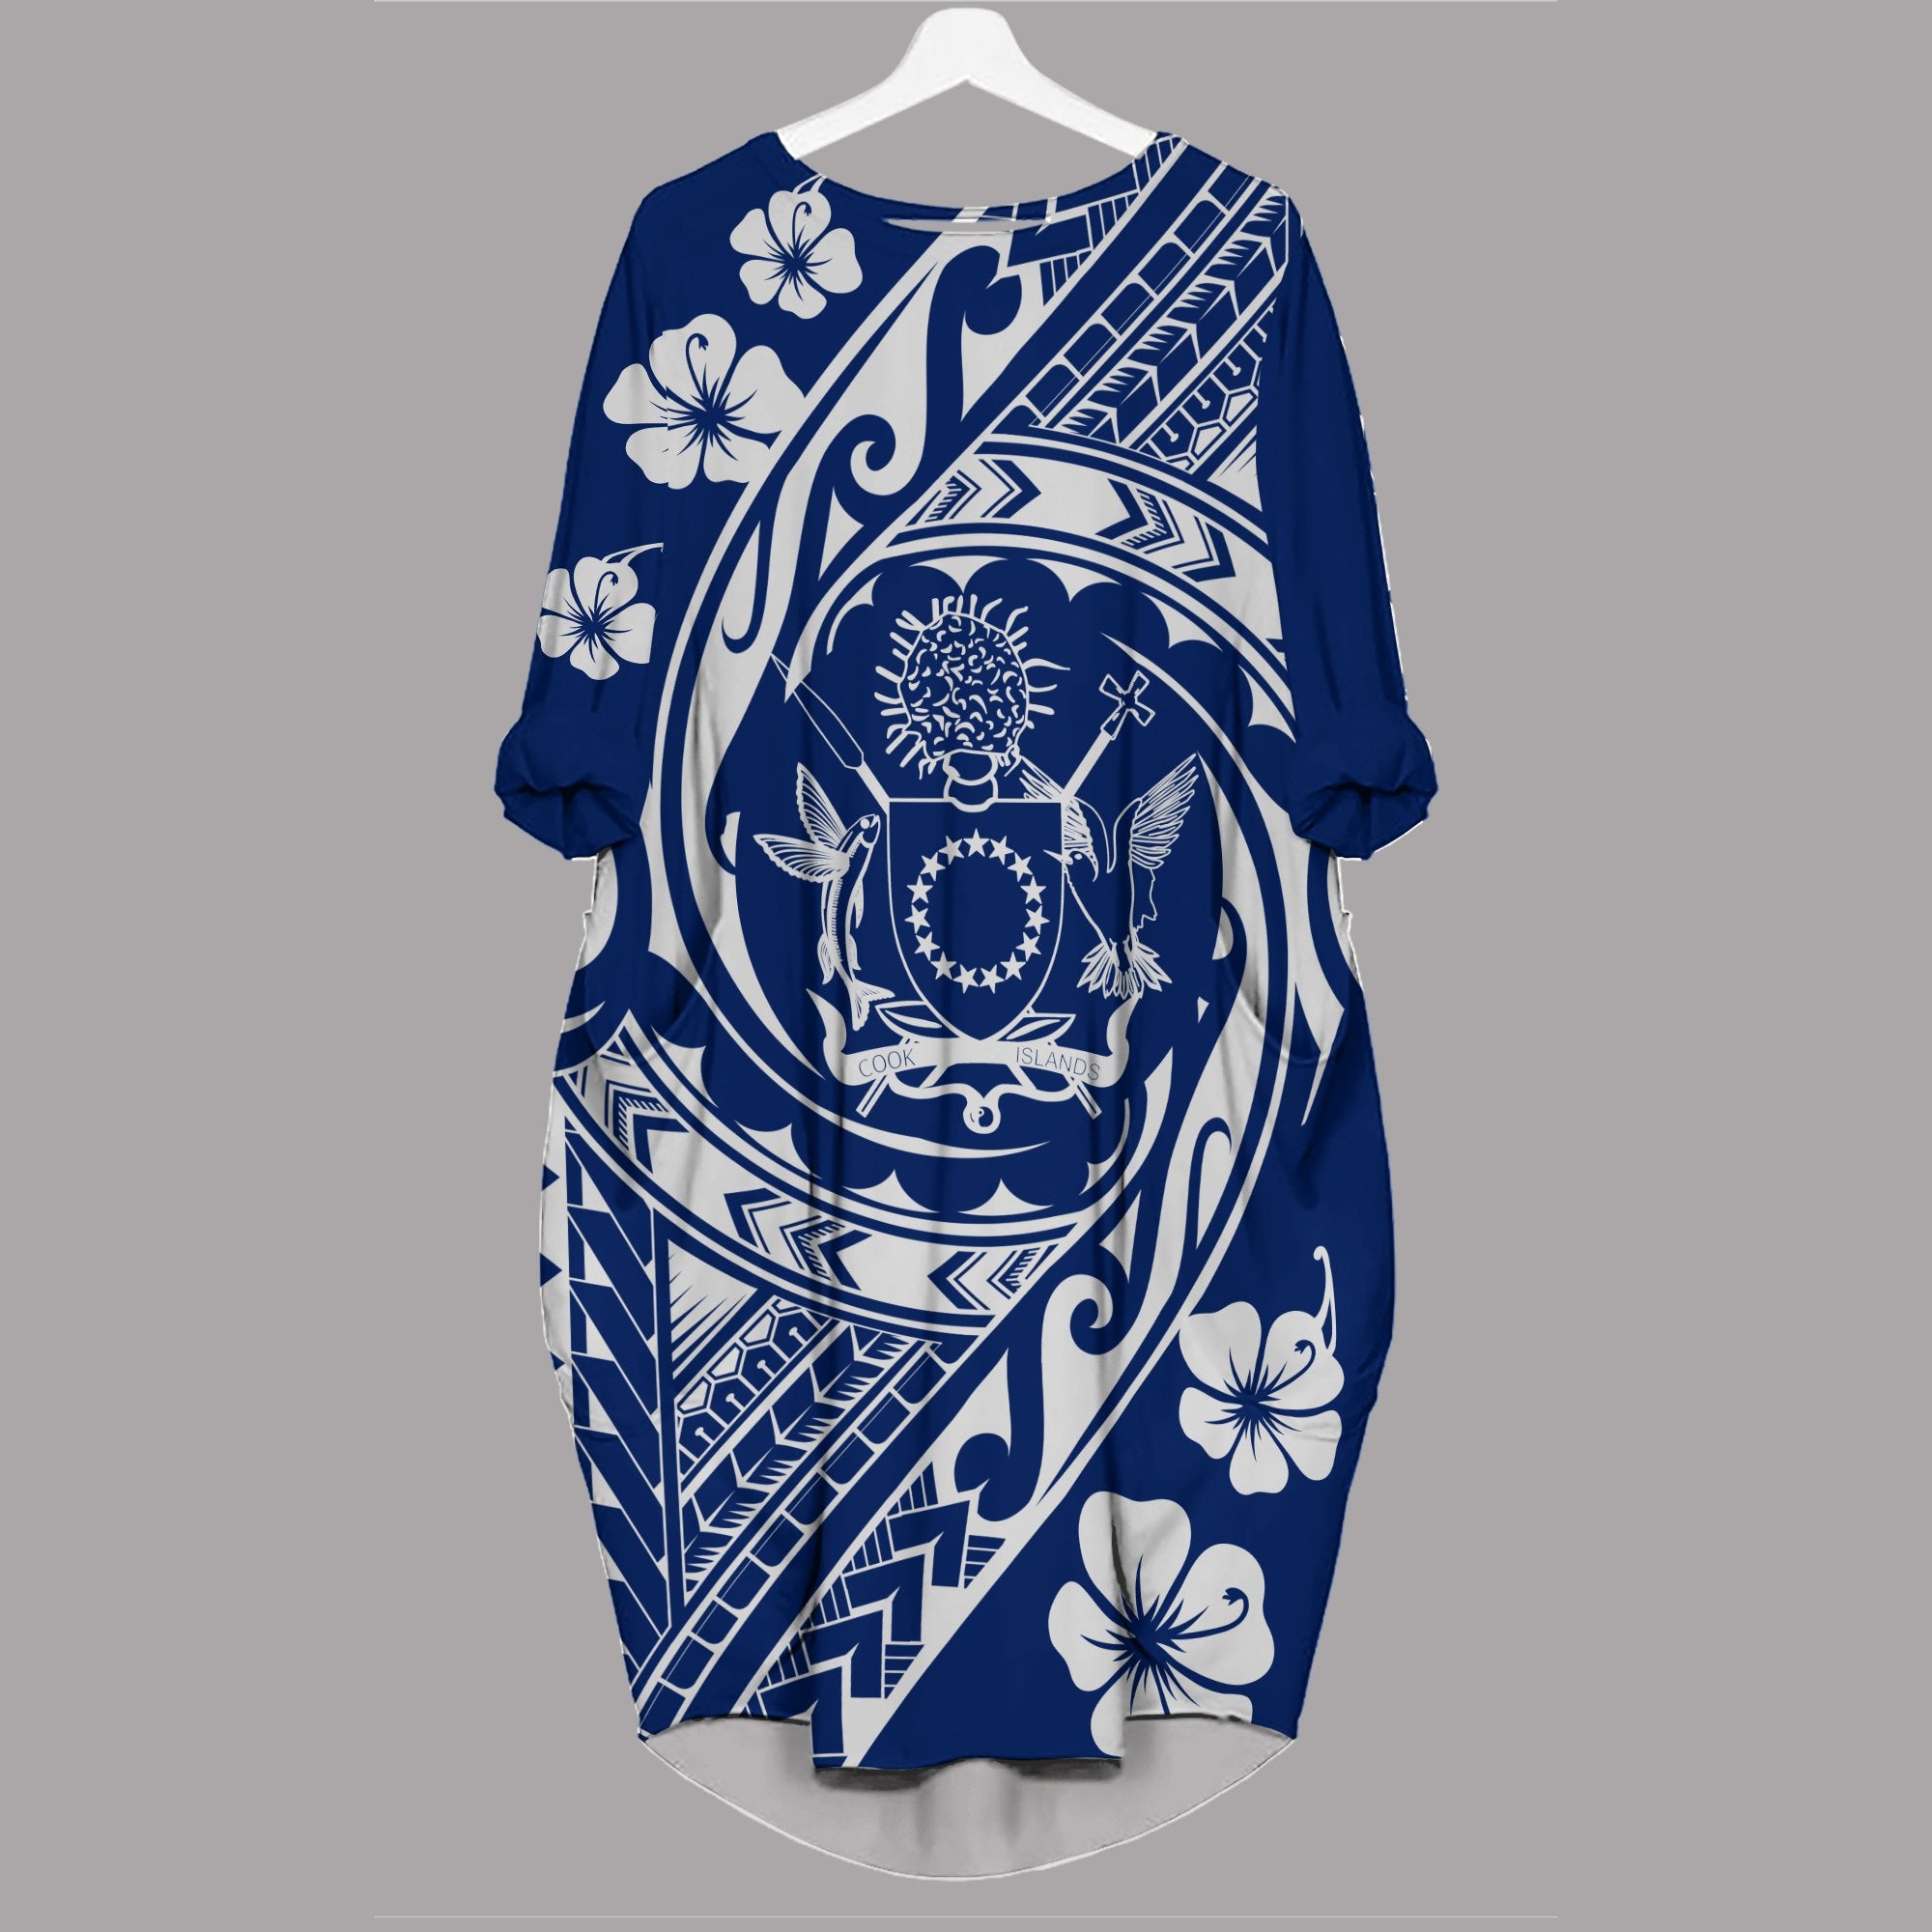 Cook Islands Batwing Pocket Dress - Tribal Tattoo Sleeve Women Blue - Polynesian Pride